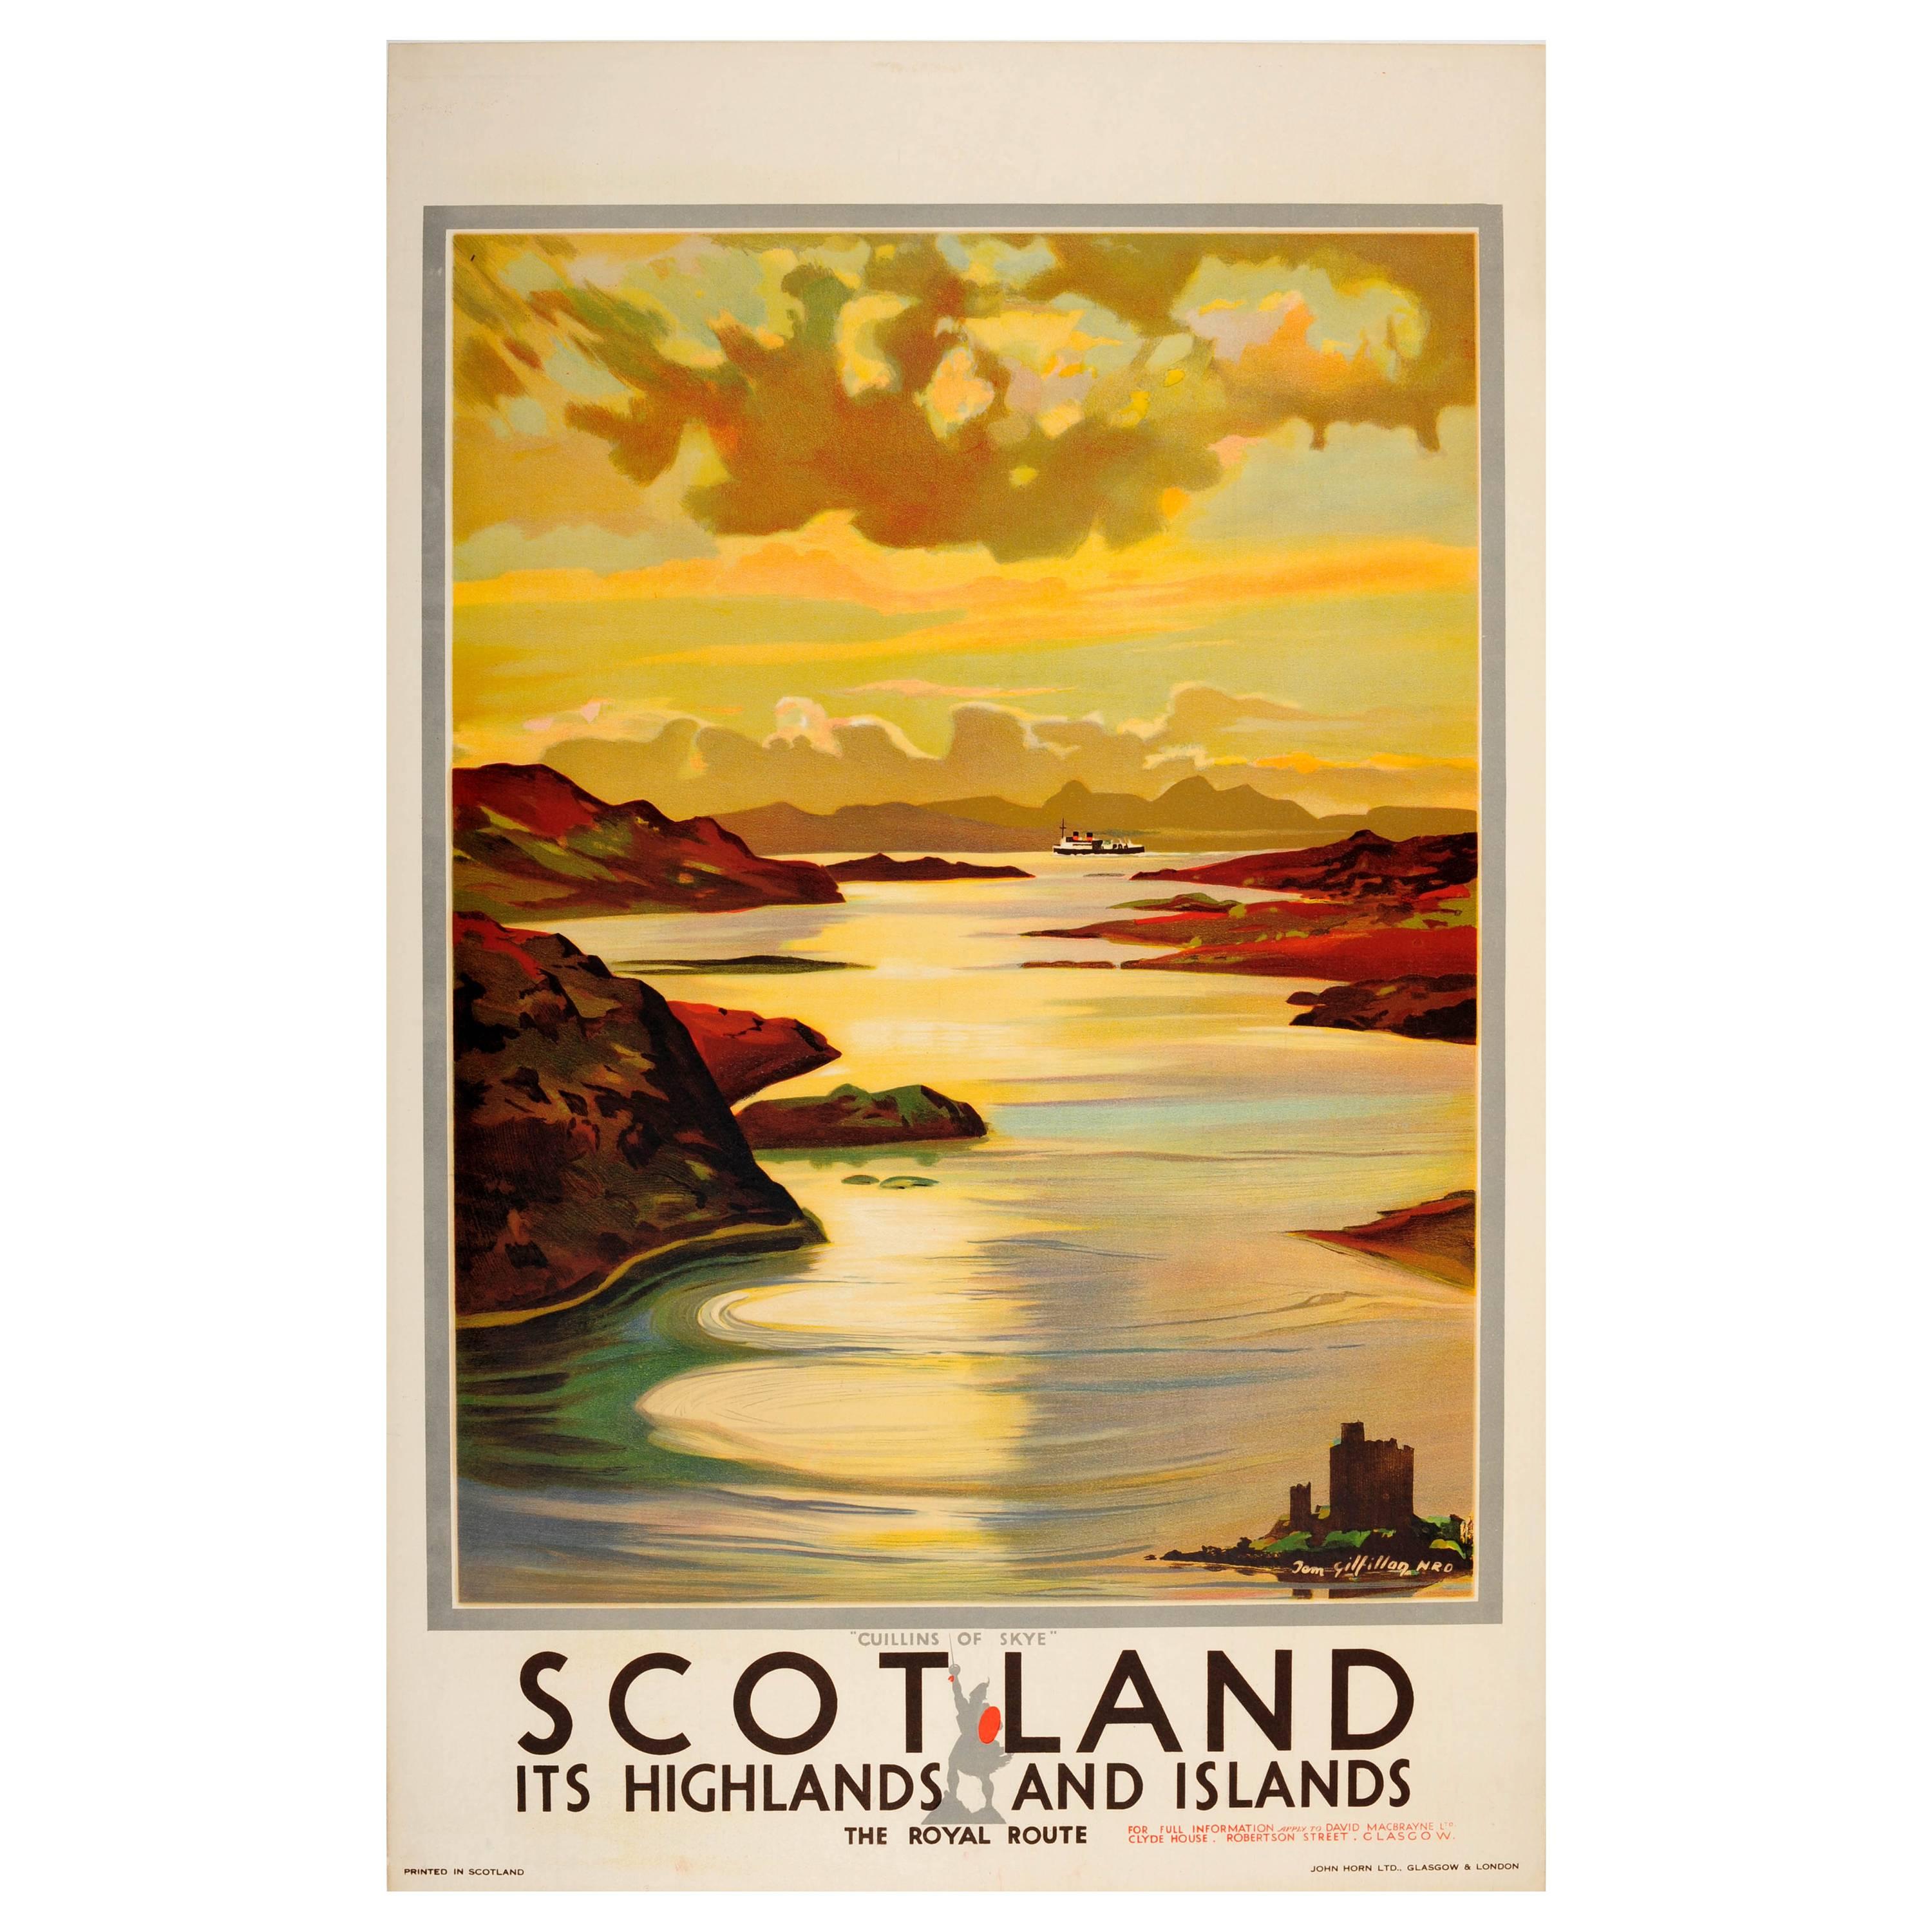 Original Vintage Isle of Skye Poster Scotland Highlands and Islands Royal Route